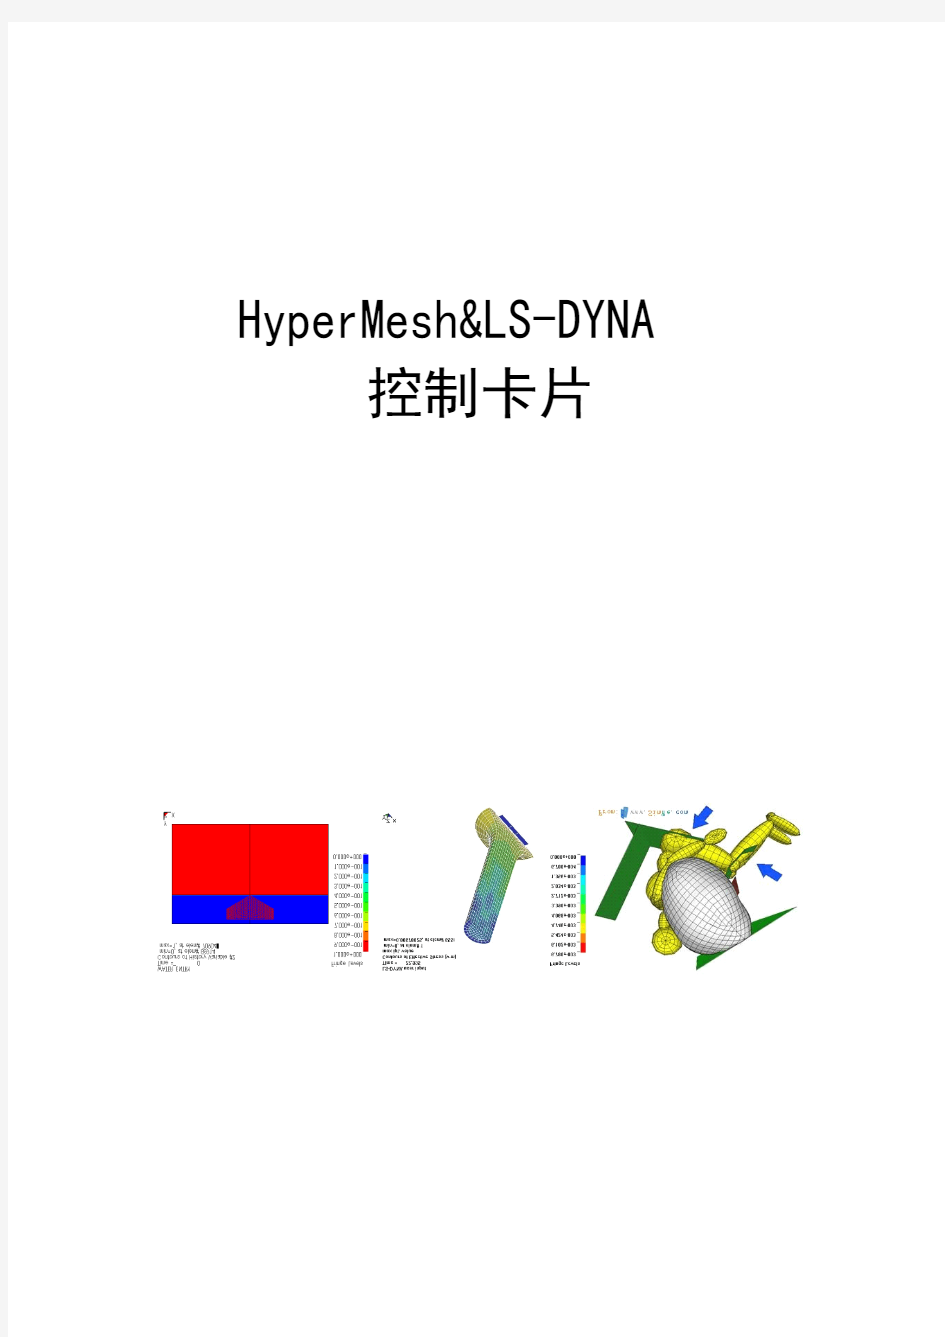 HyperMesh&LS-DYNA 控制卡片